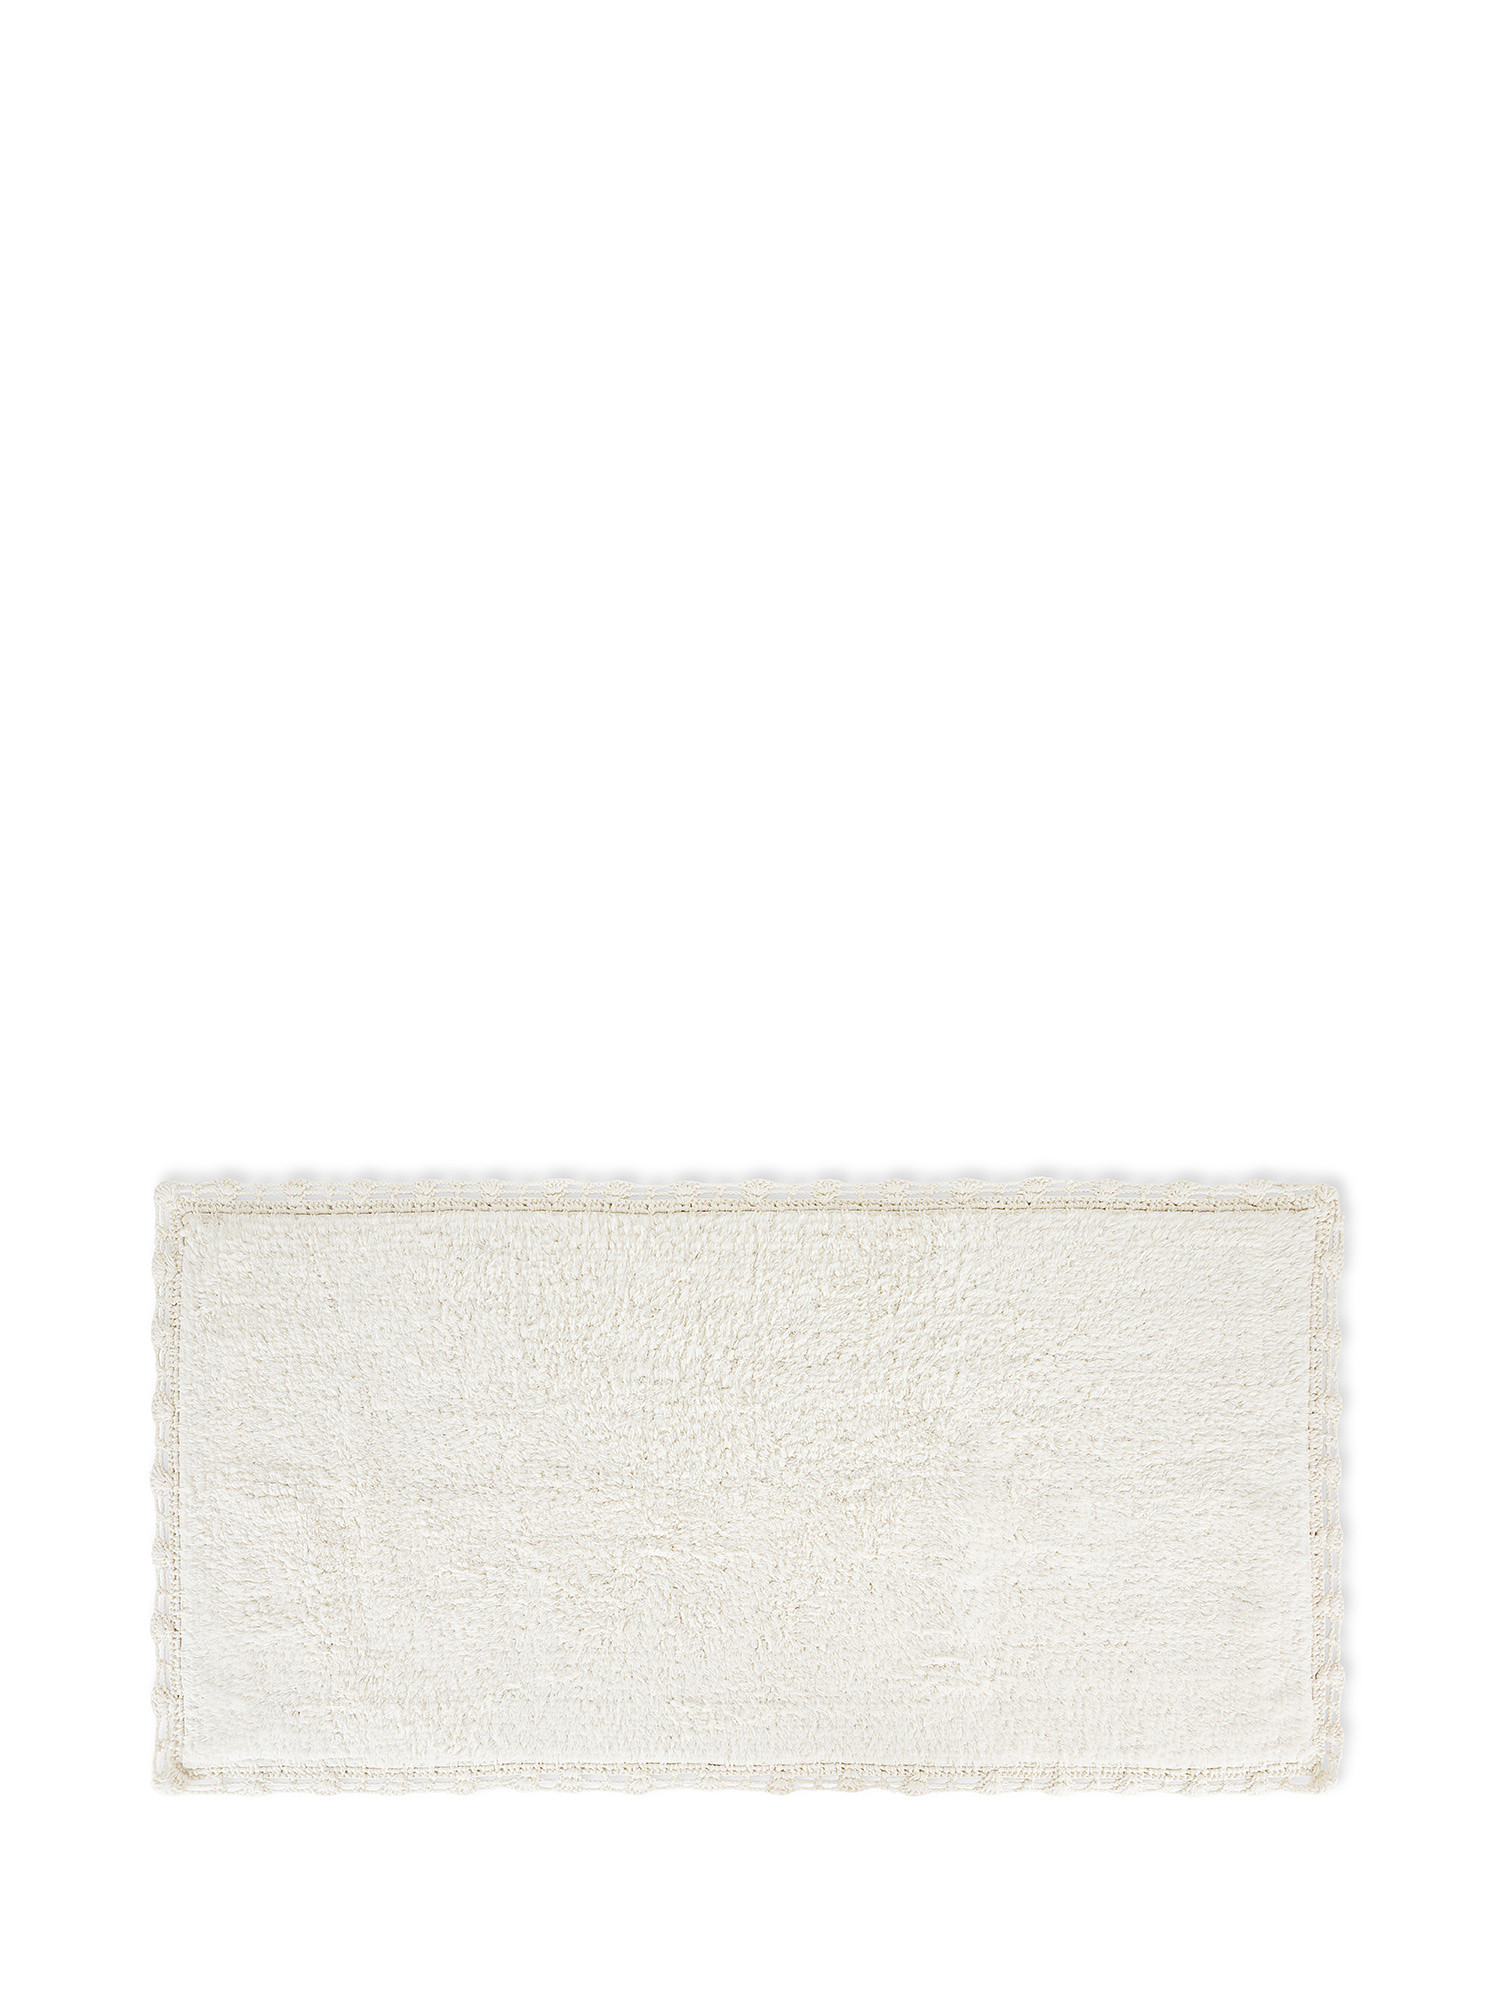 Tappeto bagno cotone bordo crochet, Bianco, large image number 0